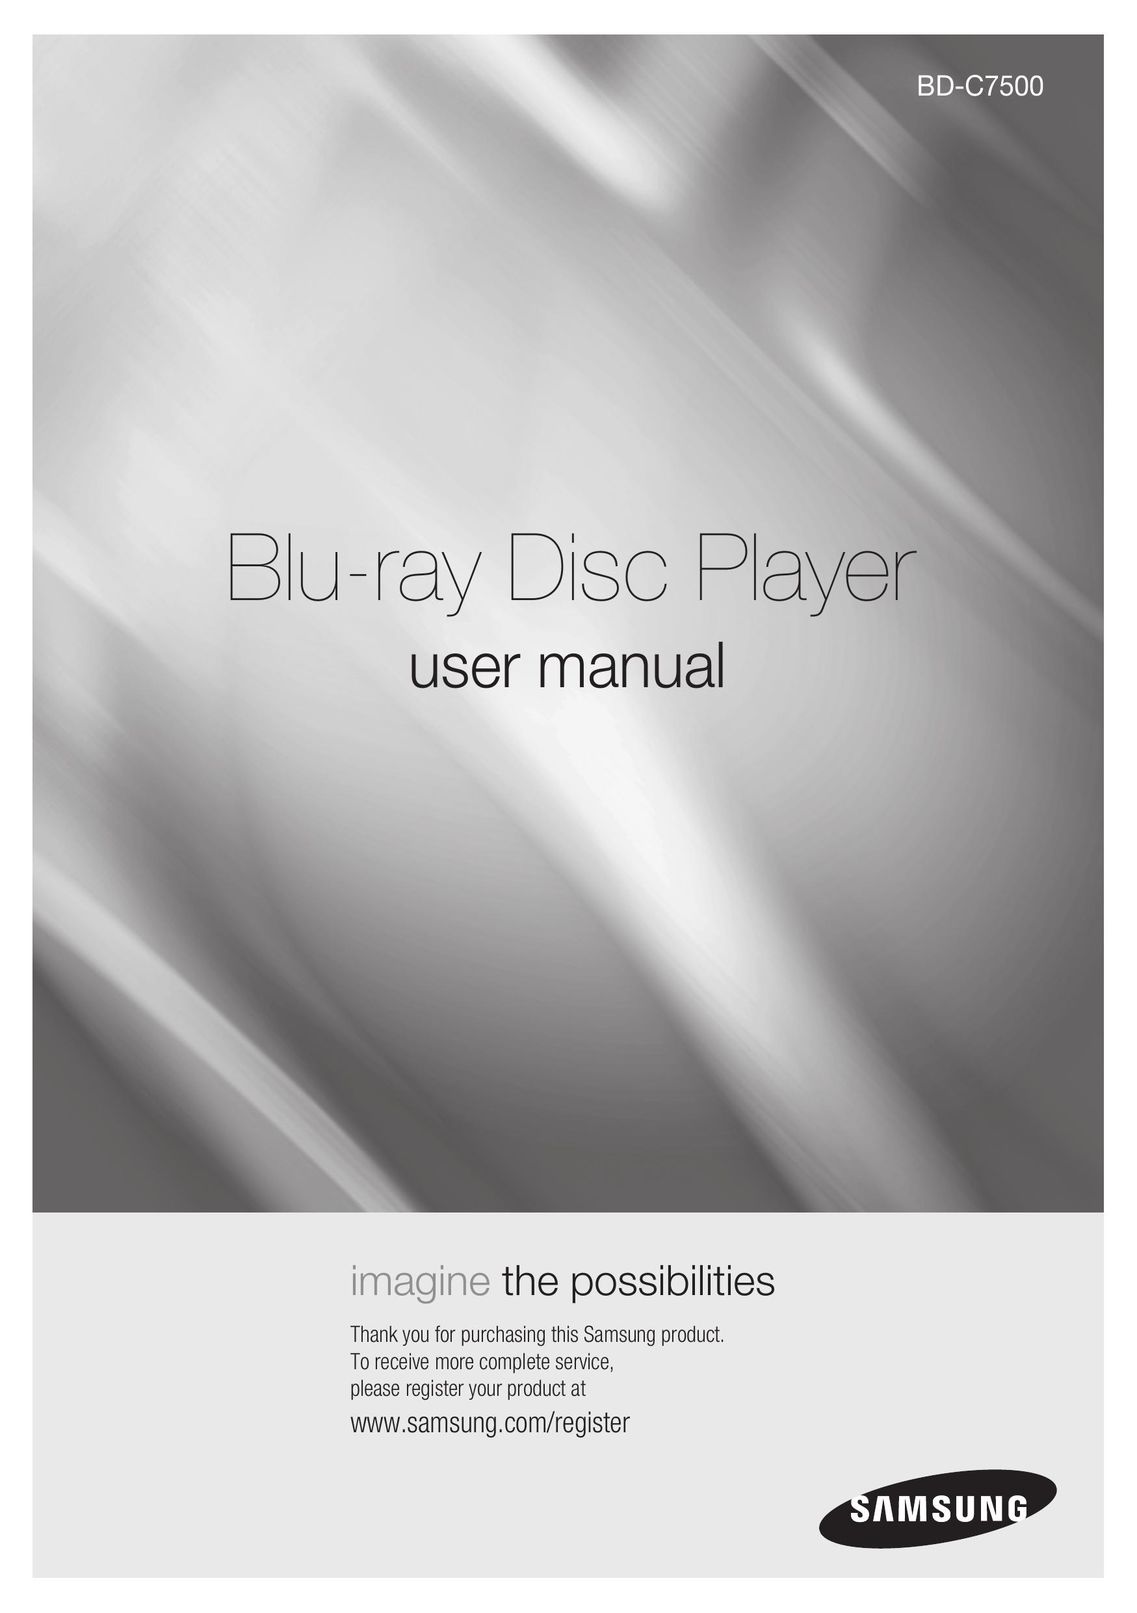 Samsung BD-C7500 Blu-ray Player User Manual